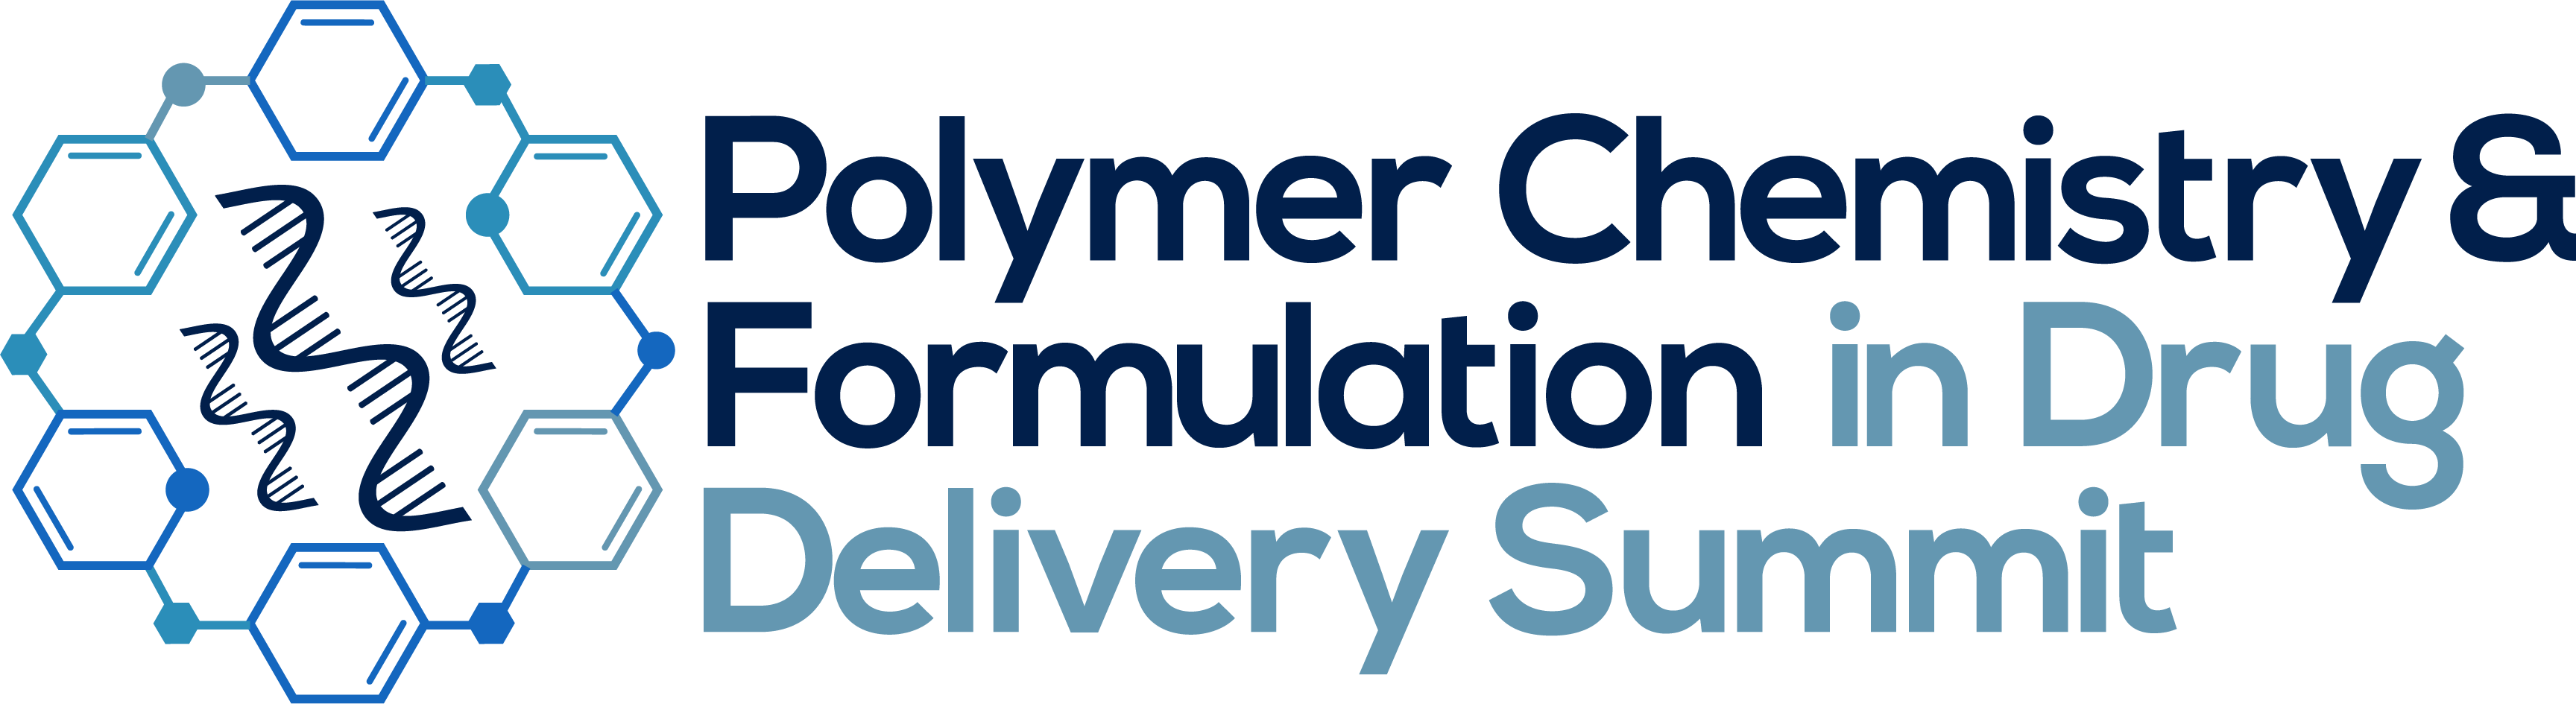 Polymer Chemistry & Formulation in Drug Delivery Summit Full Colour No Strapline v2 (1)